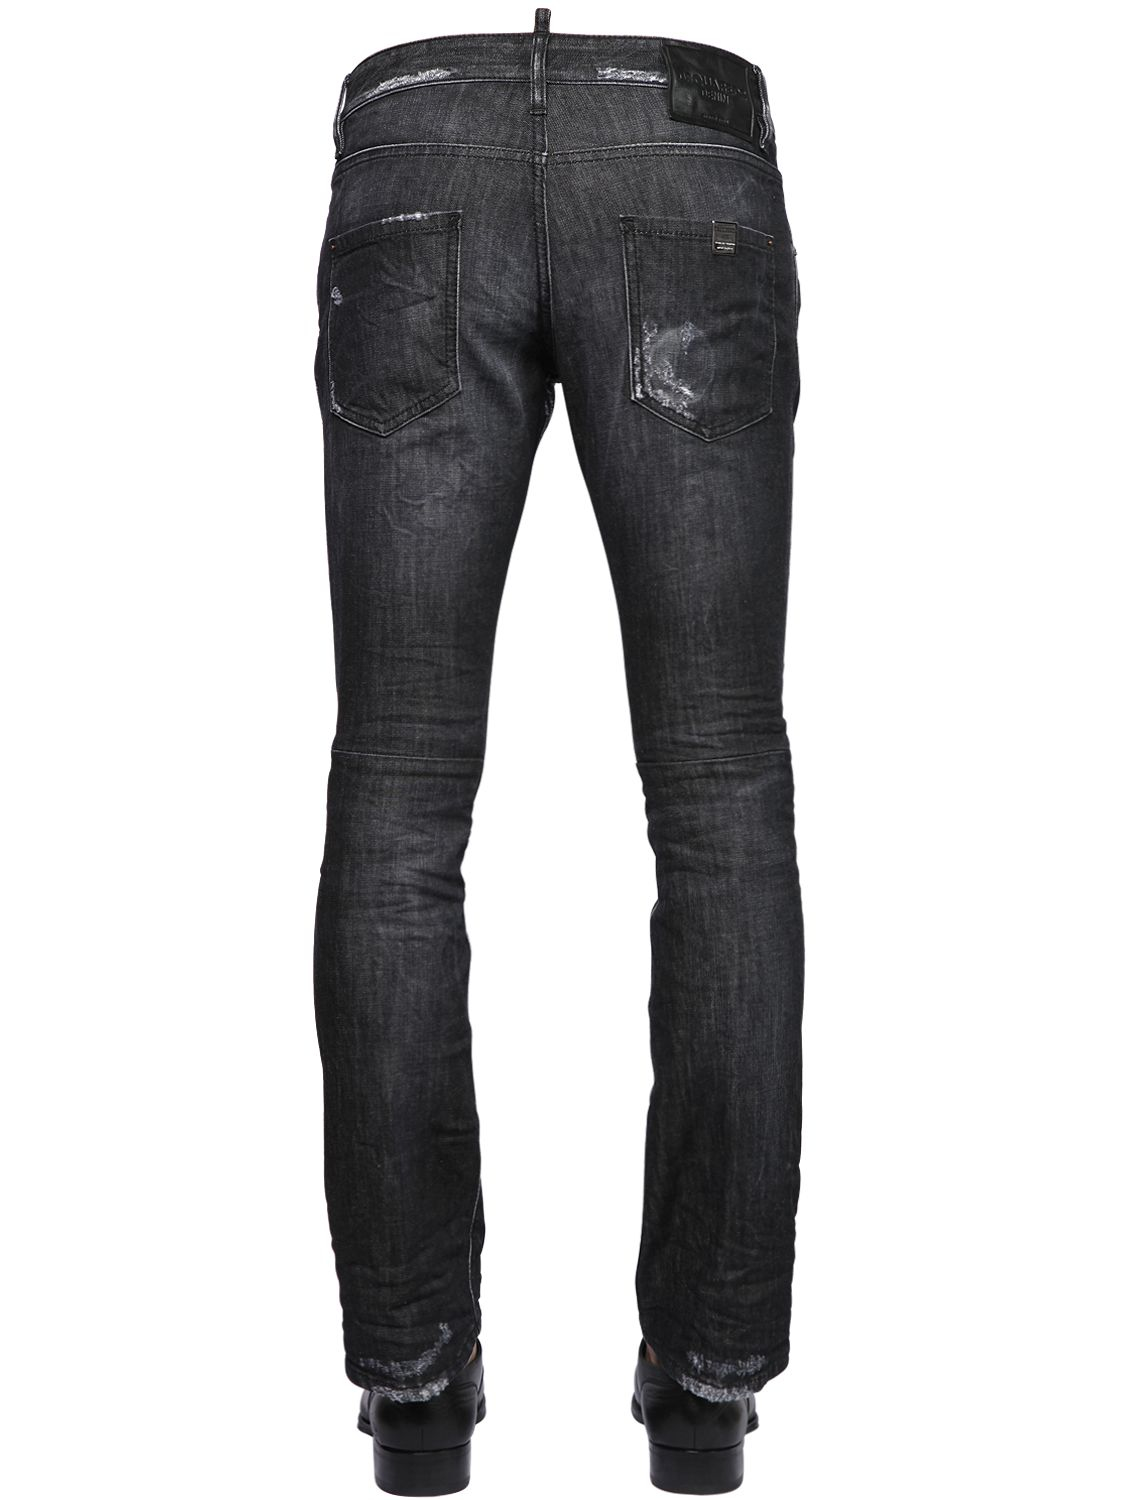 dark boot cut jeans for men